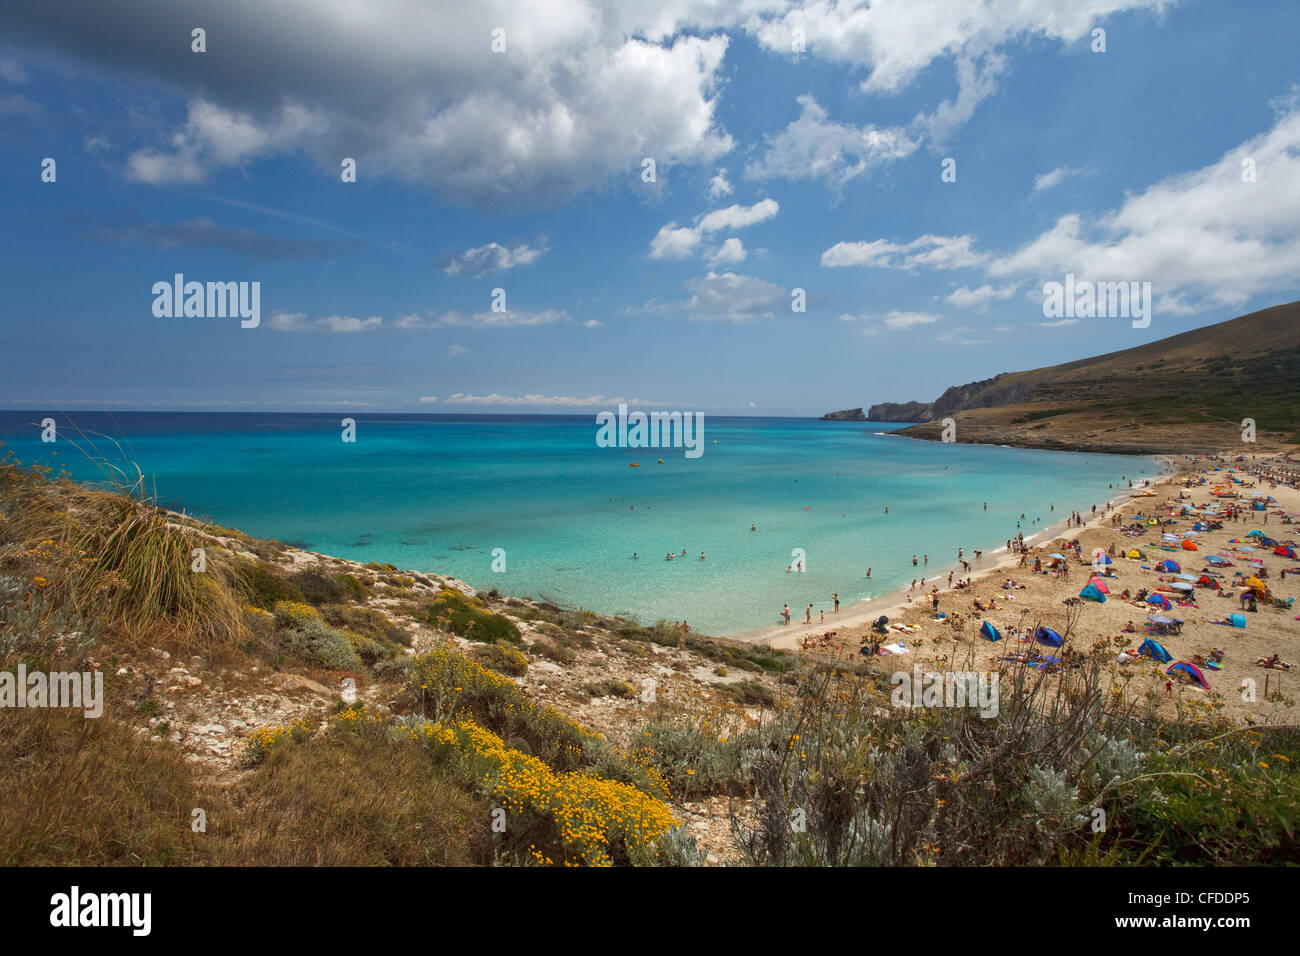 People on the beach in a bay, Cala Mesquida, Mallorca, Balearic Islands, Spain, Europe Stock Photo